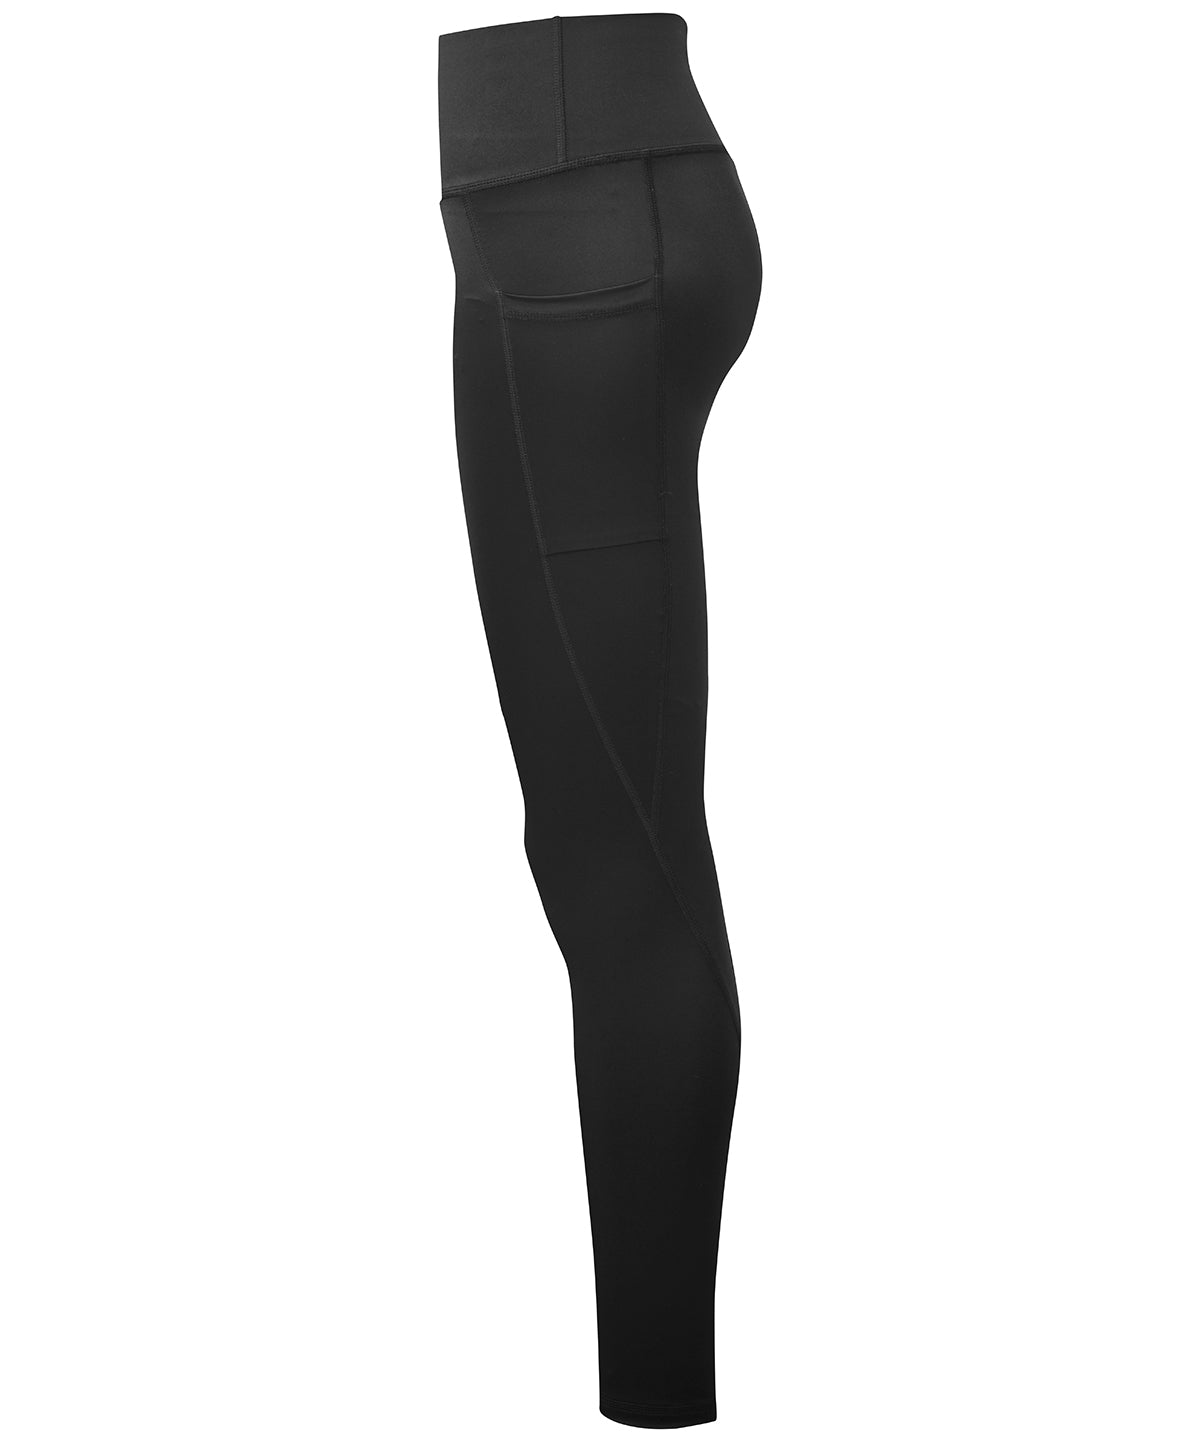 Women's TriDri® High-Shine leggings - Hamtons Direct